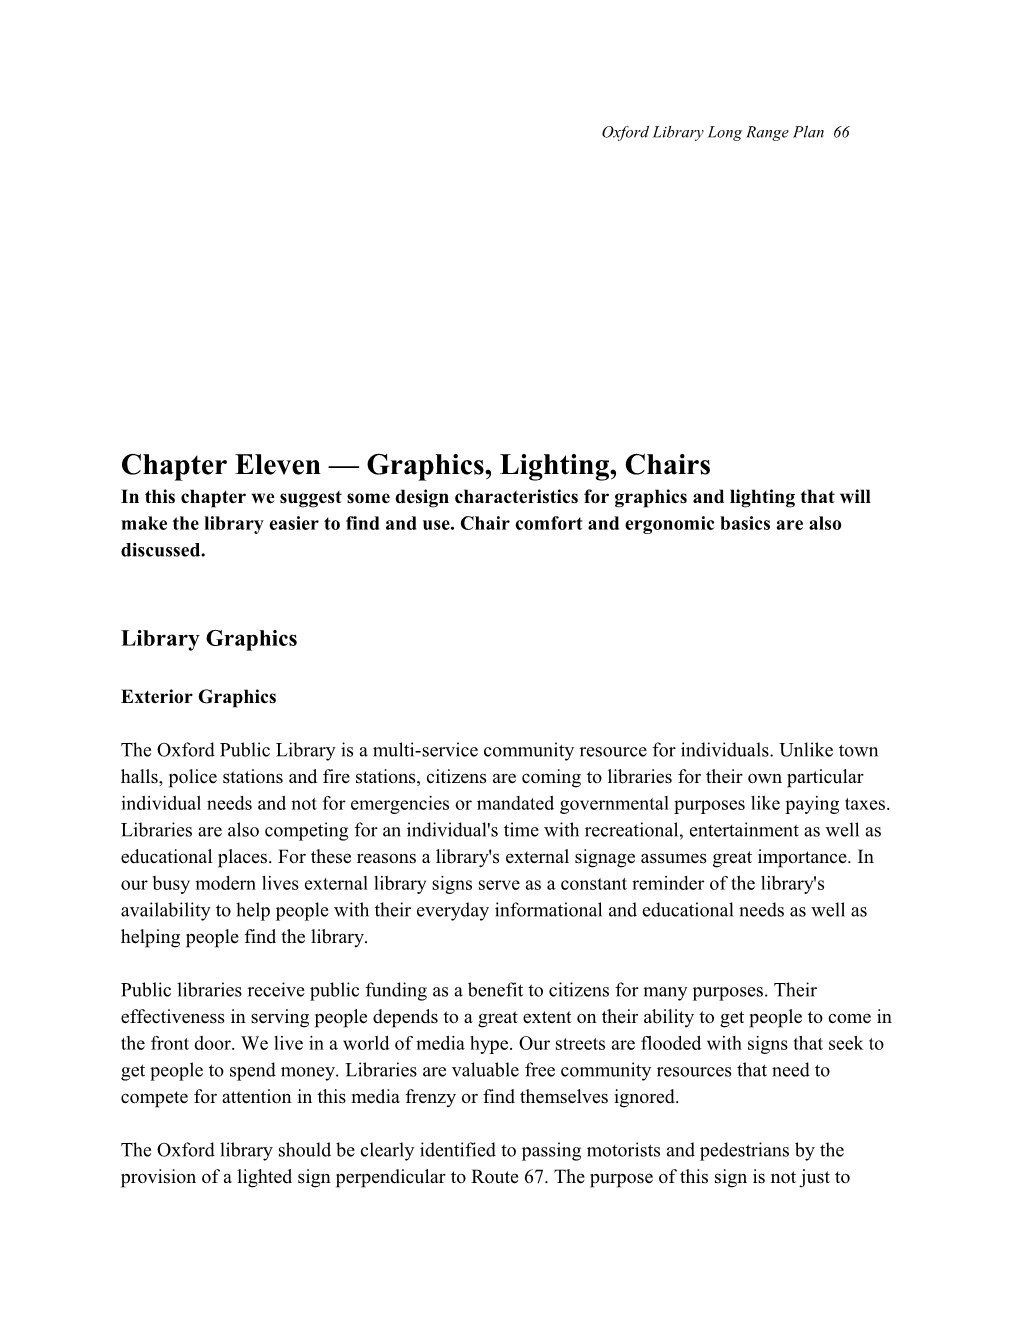 Chapter Ten Graphics, Lighting, Chairs